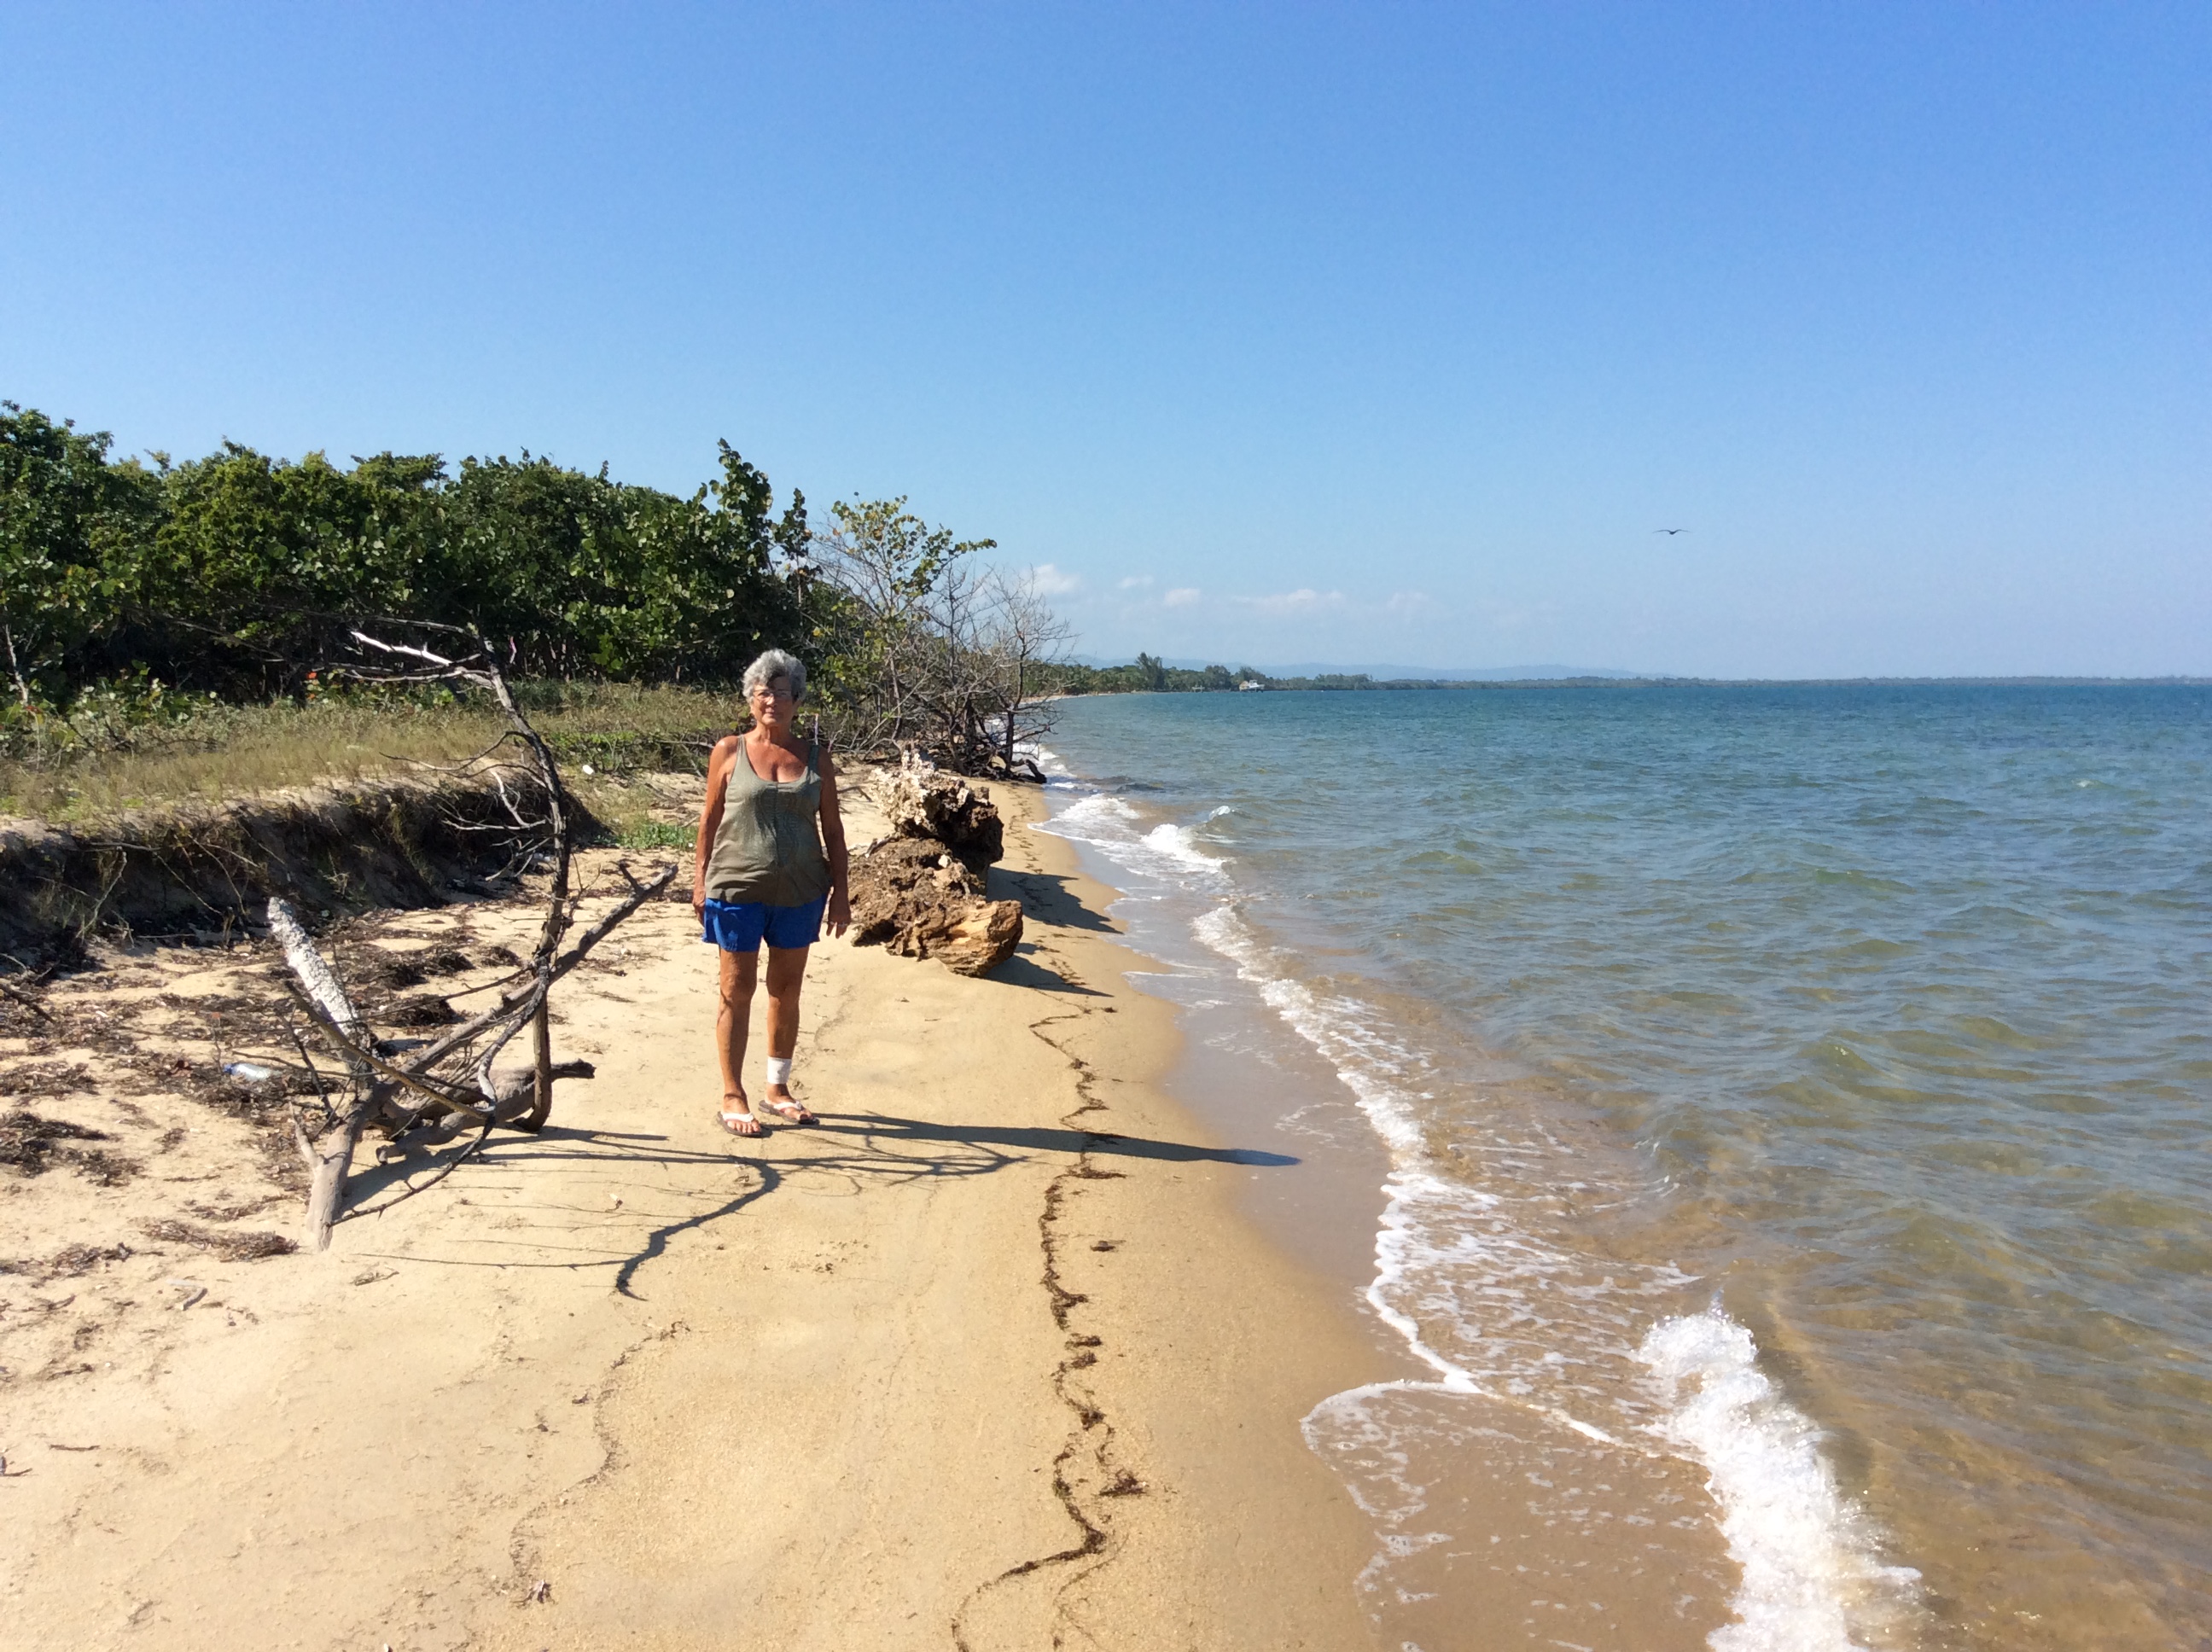 February 2015 - Strolling along the beautiful Mayacan beach!